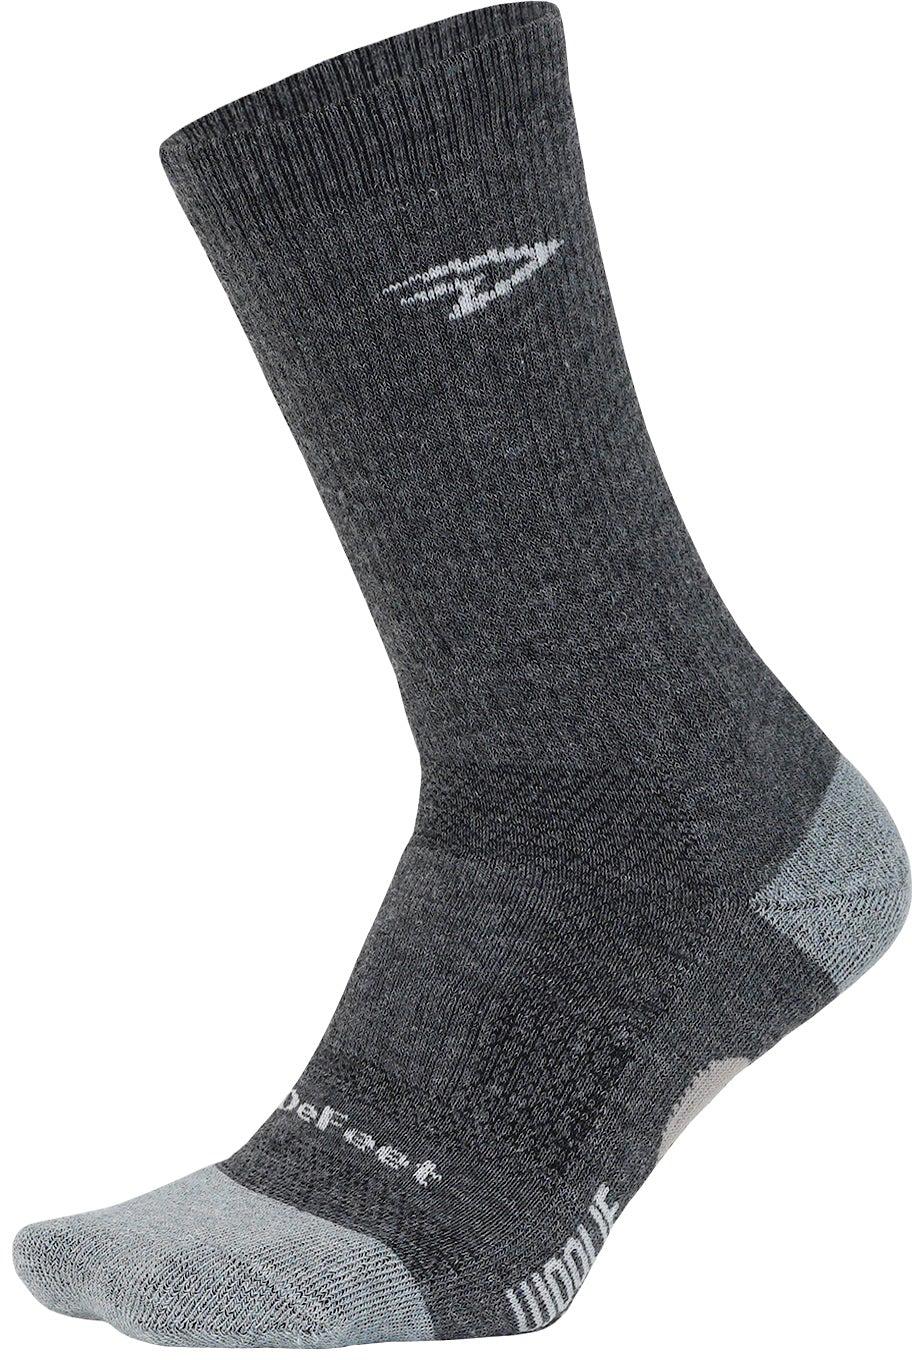 Defeet Woolie Boolie Comp 6 Socks - Black 2